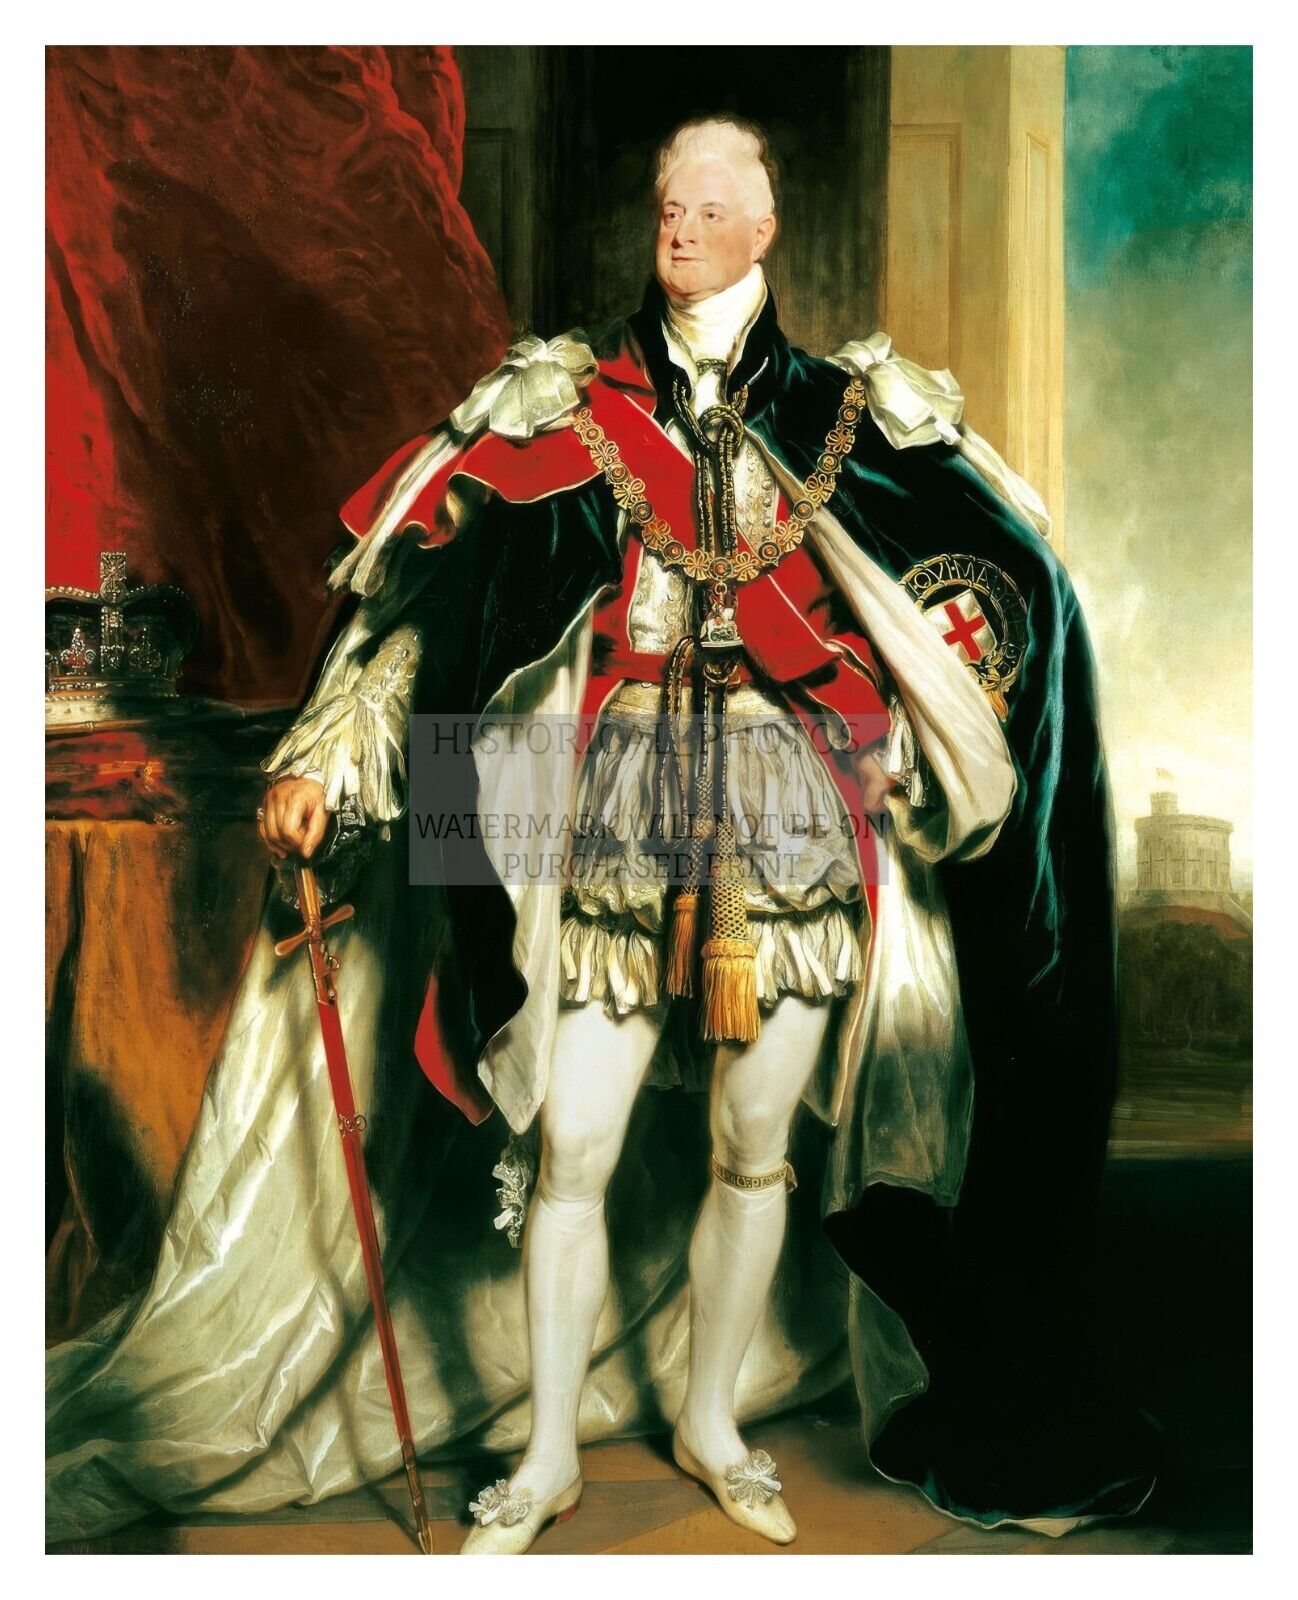 KING WILLIAM IV OF ENGLAND ROYALTY 8X10 PHOTO